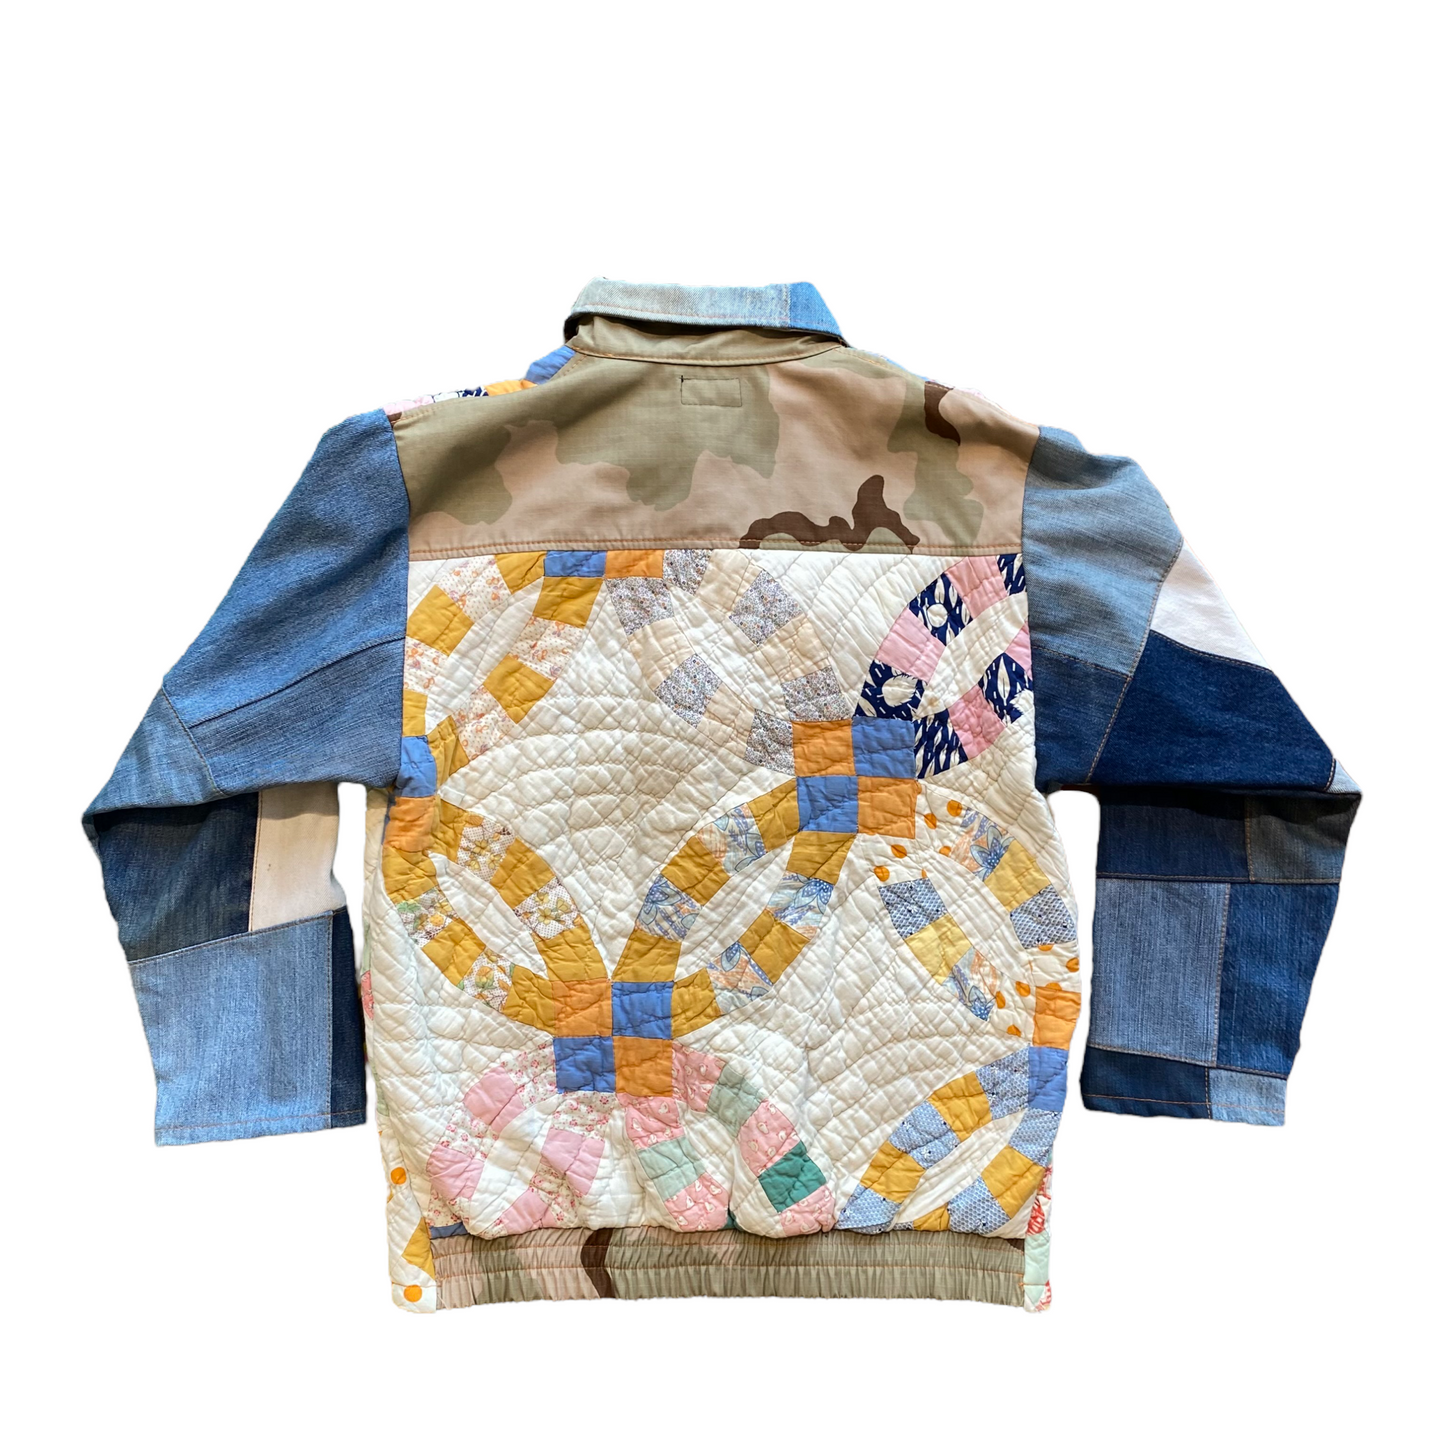 Quilt + Denim Patchwork Jacket // Random Selection